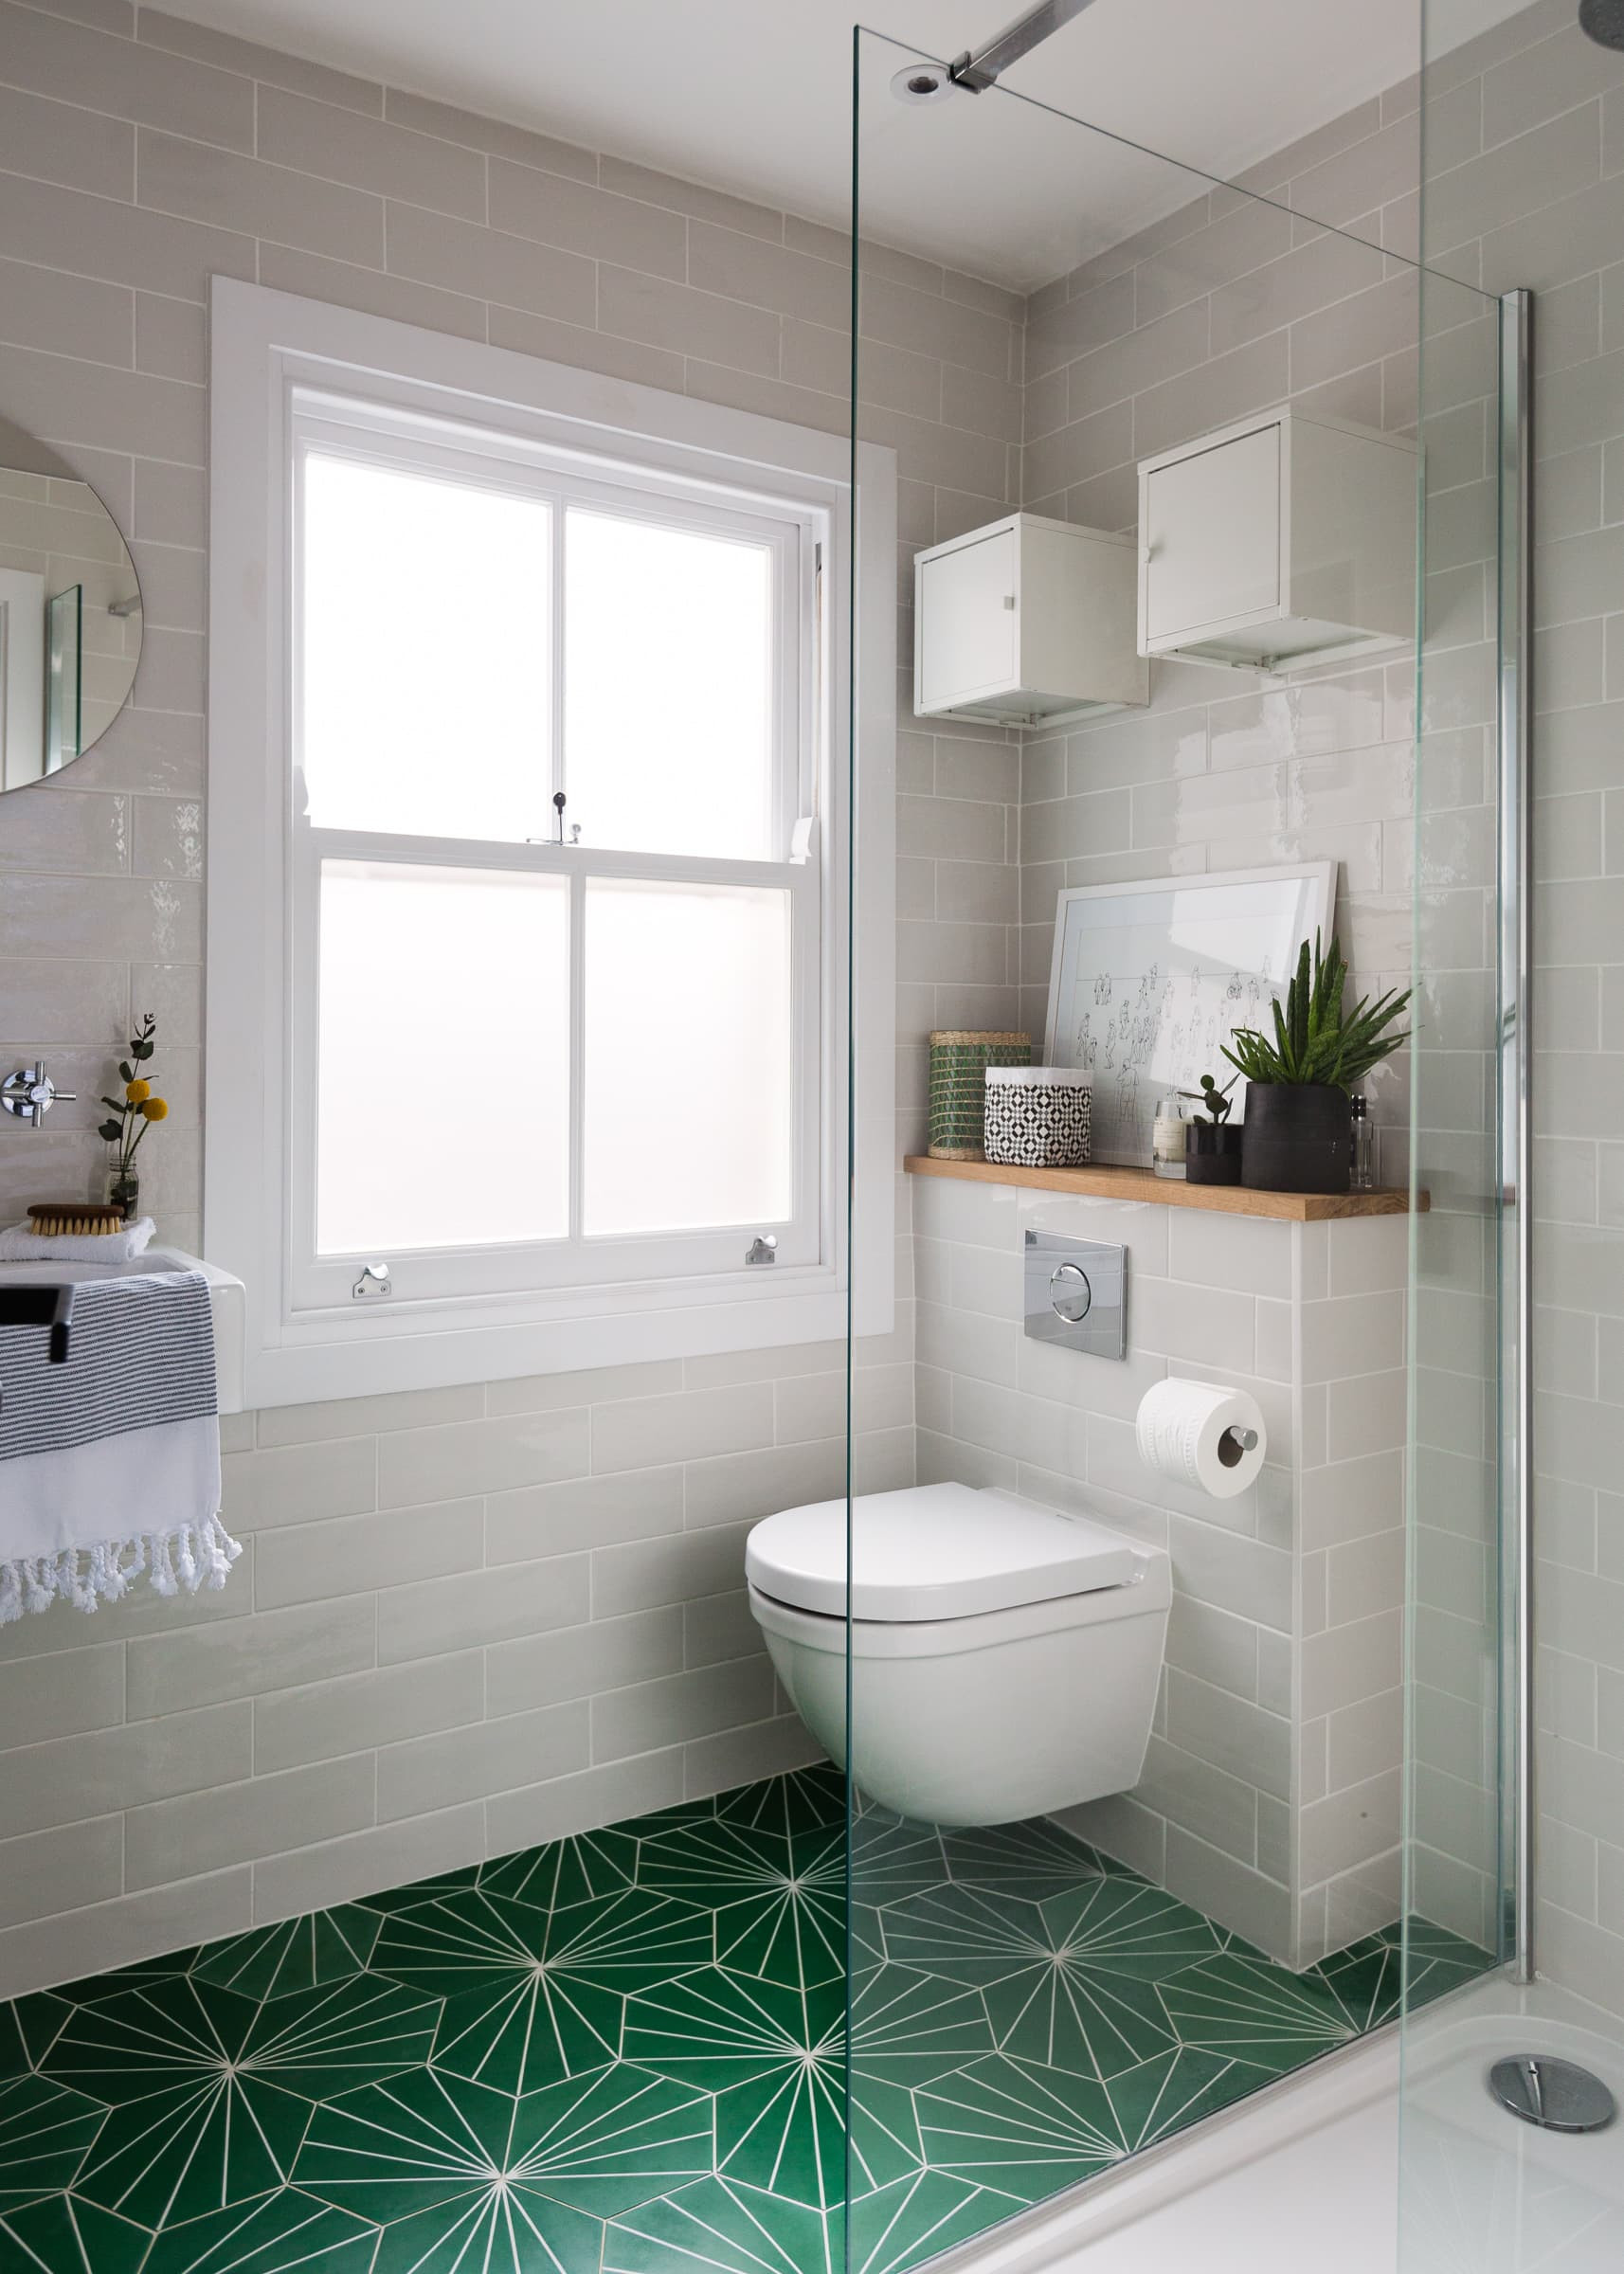 Bathroom Tile Ideas Floor
 Bathroom Tile Ideas Floor Shower Wall Designs